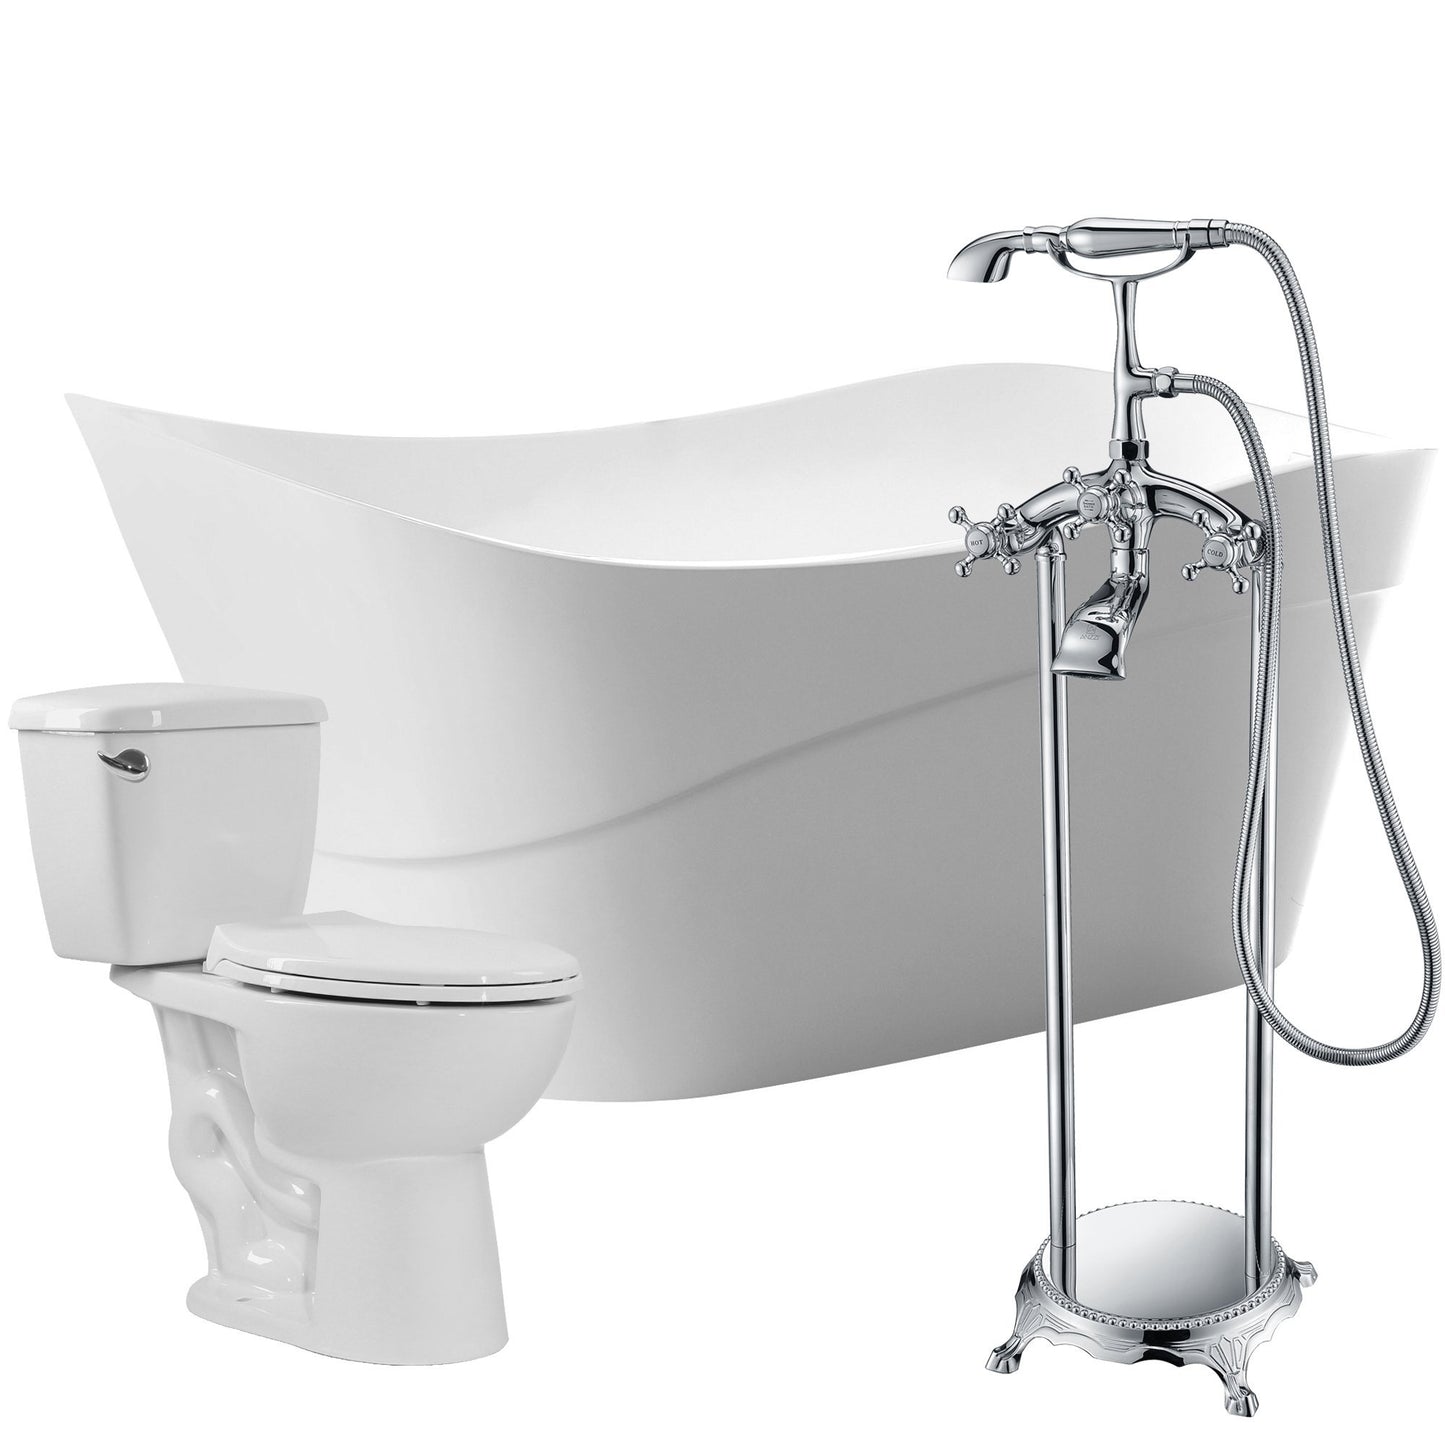 Kahl 67 in. Acrylic Flatbottom Non-Whirlpool Bathtub with Tugela Faucet and Cavalier 1.28 GPF Toilet - Luxe Bathroom Vanities Luxury Bathroom Fixtures Bathroom Furniture